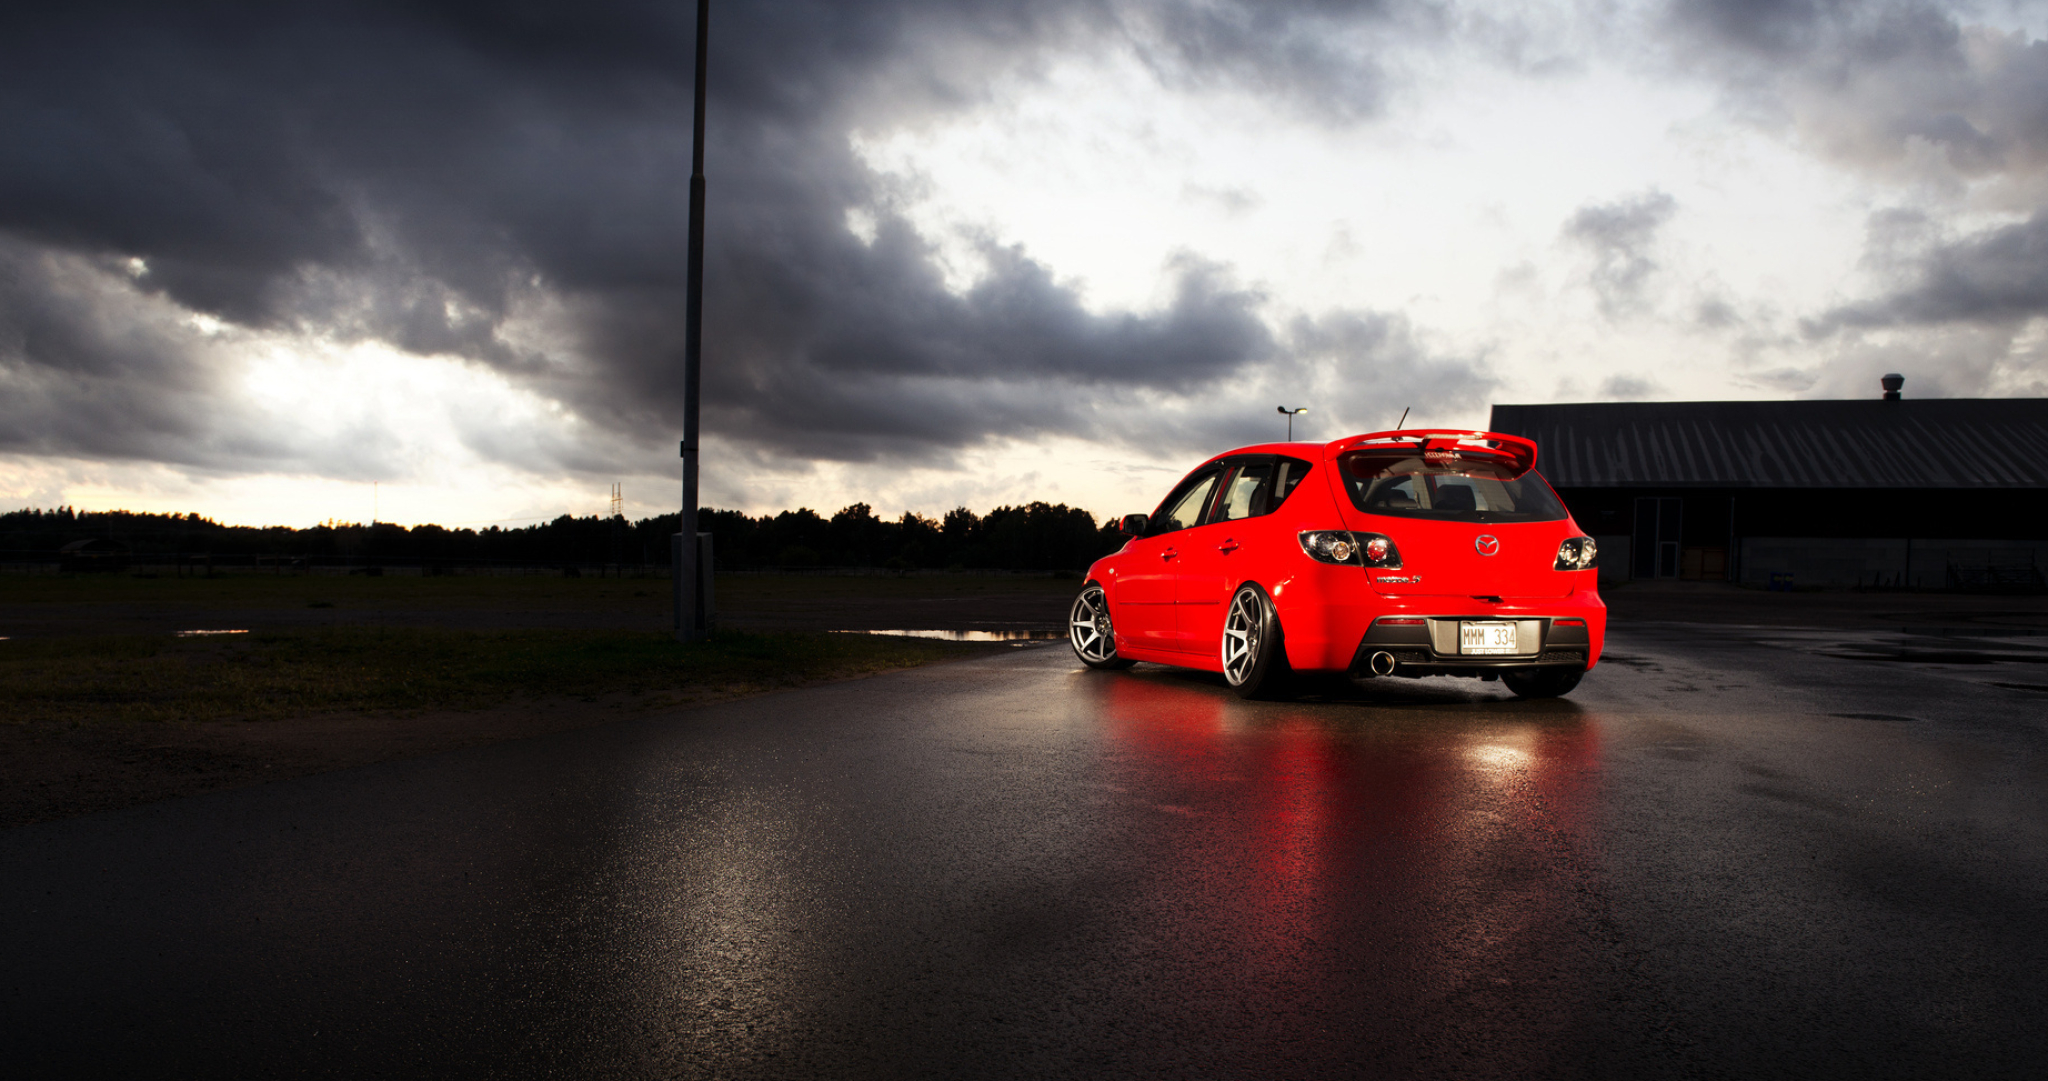 Mazda 3, High-definition wallpaper, Striking image, Automotive elegance, 2050x1090 HD Desktop